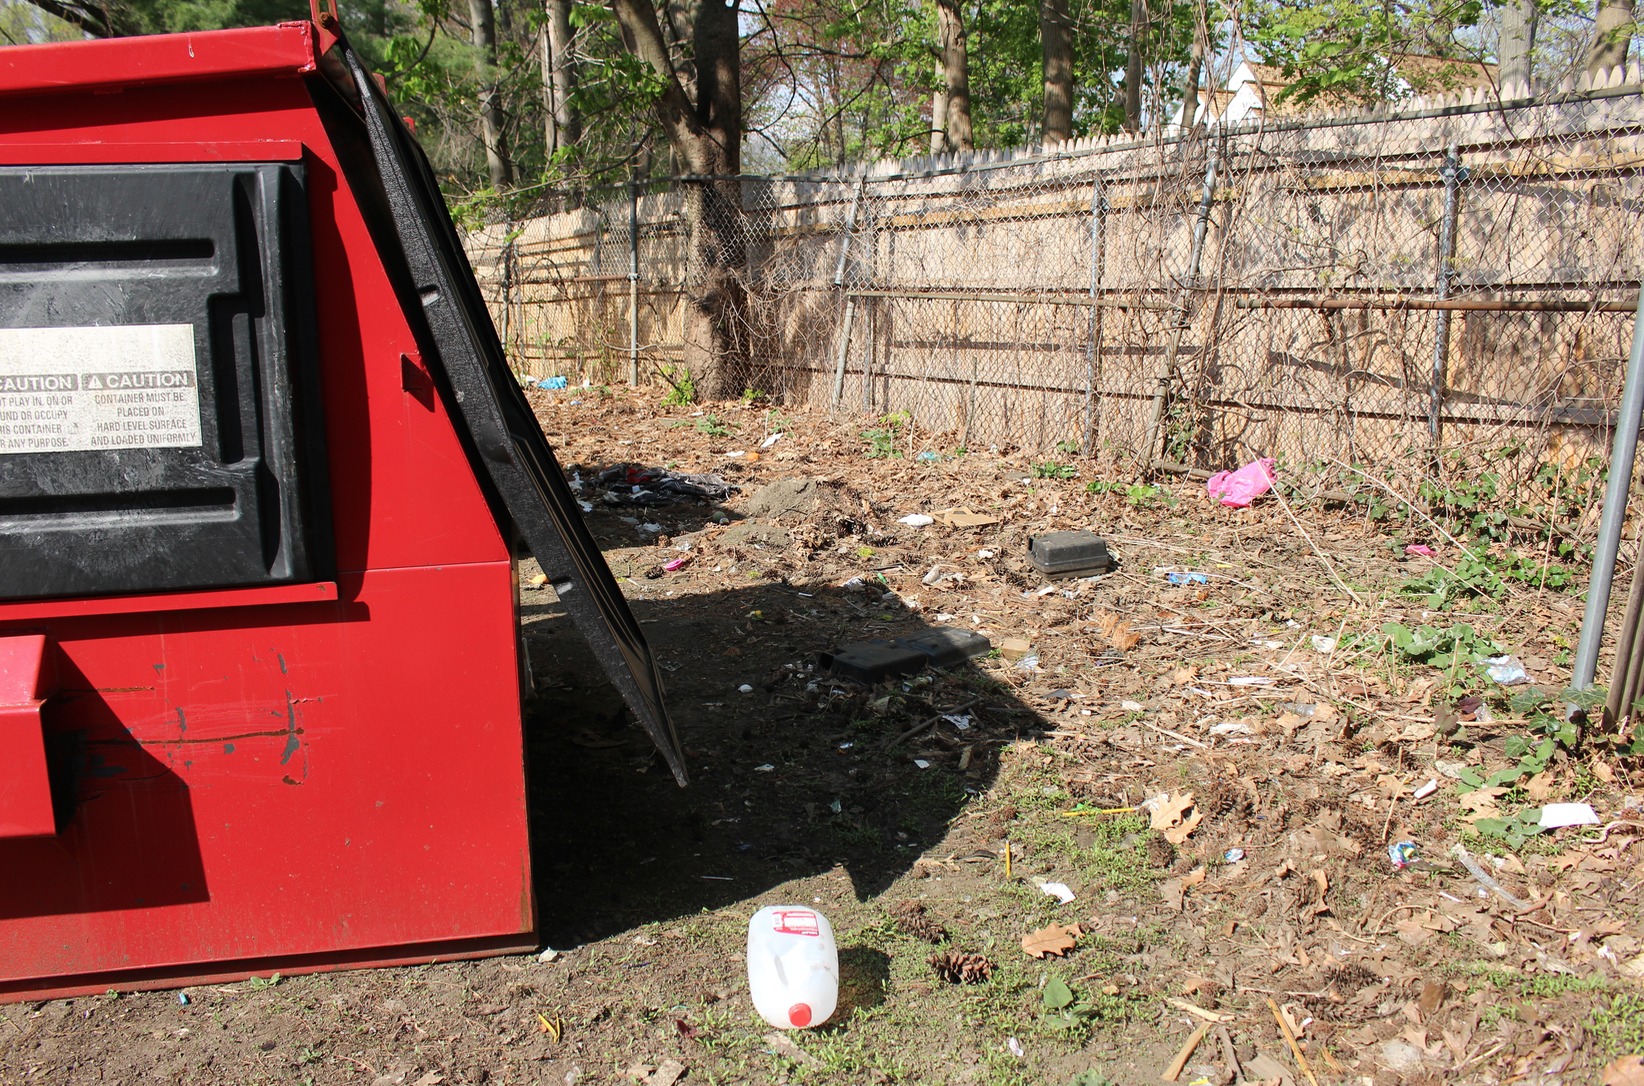 Dumpsters at Wilbur Peck, summer 2015. Photo: Leslie Yager